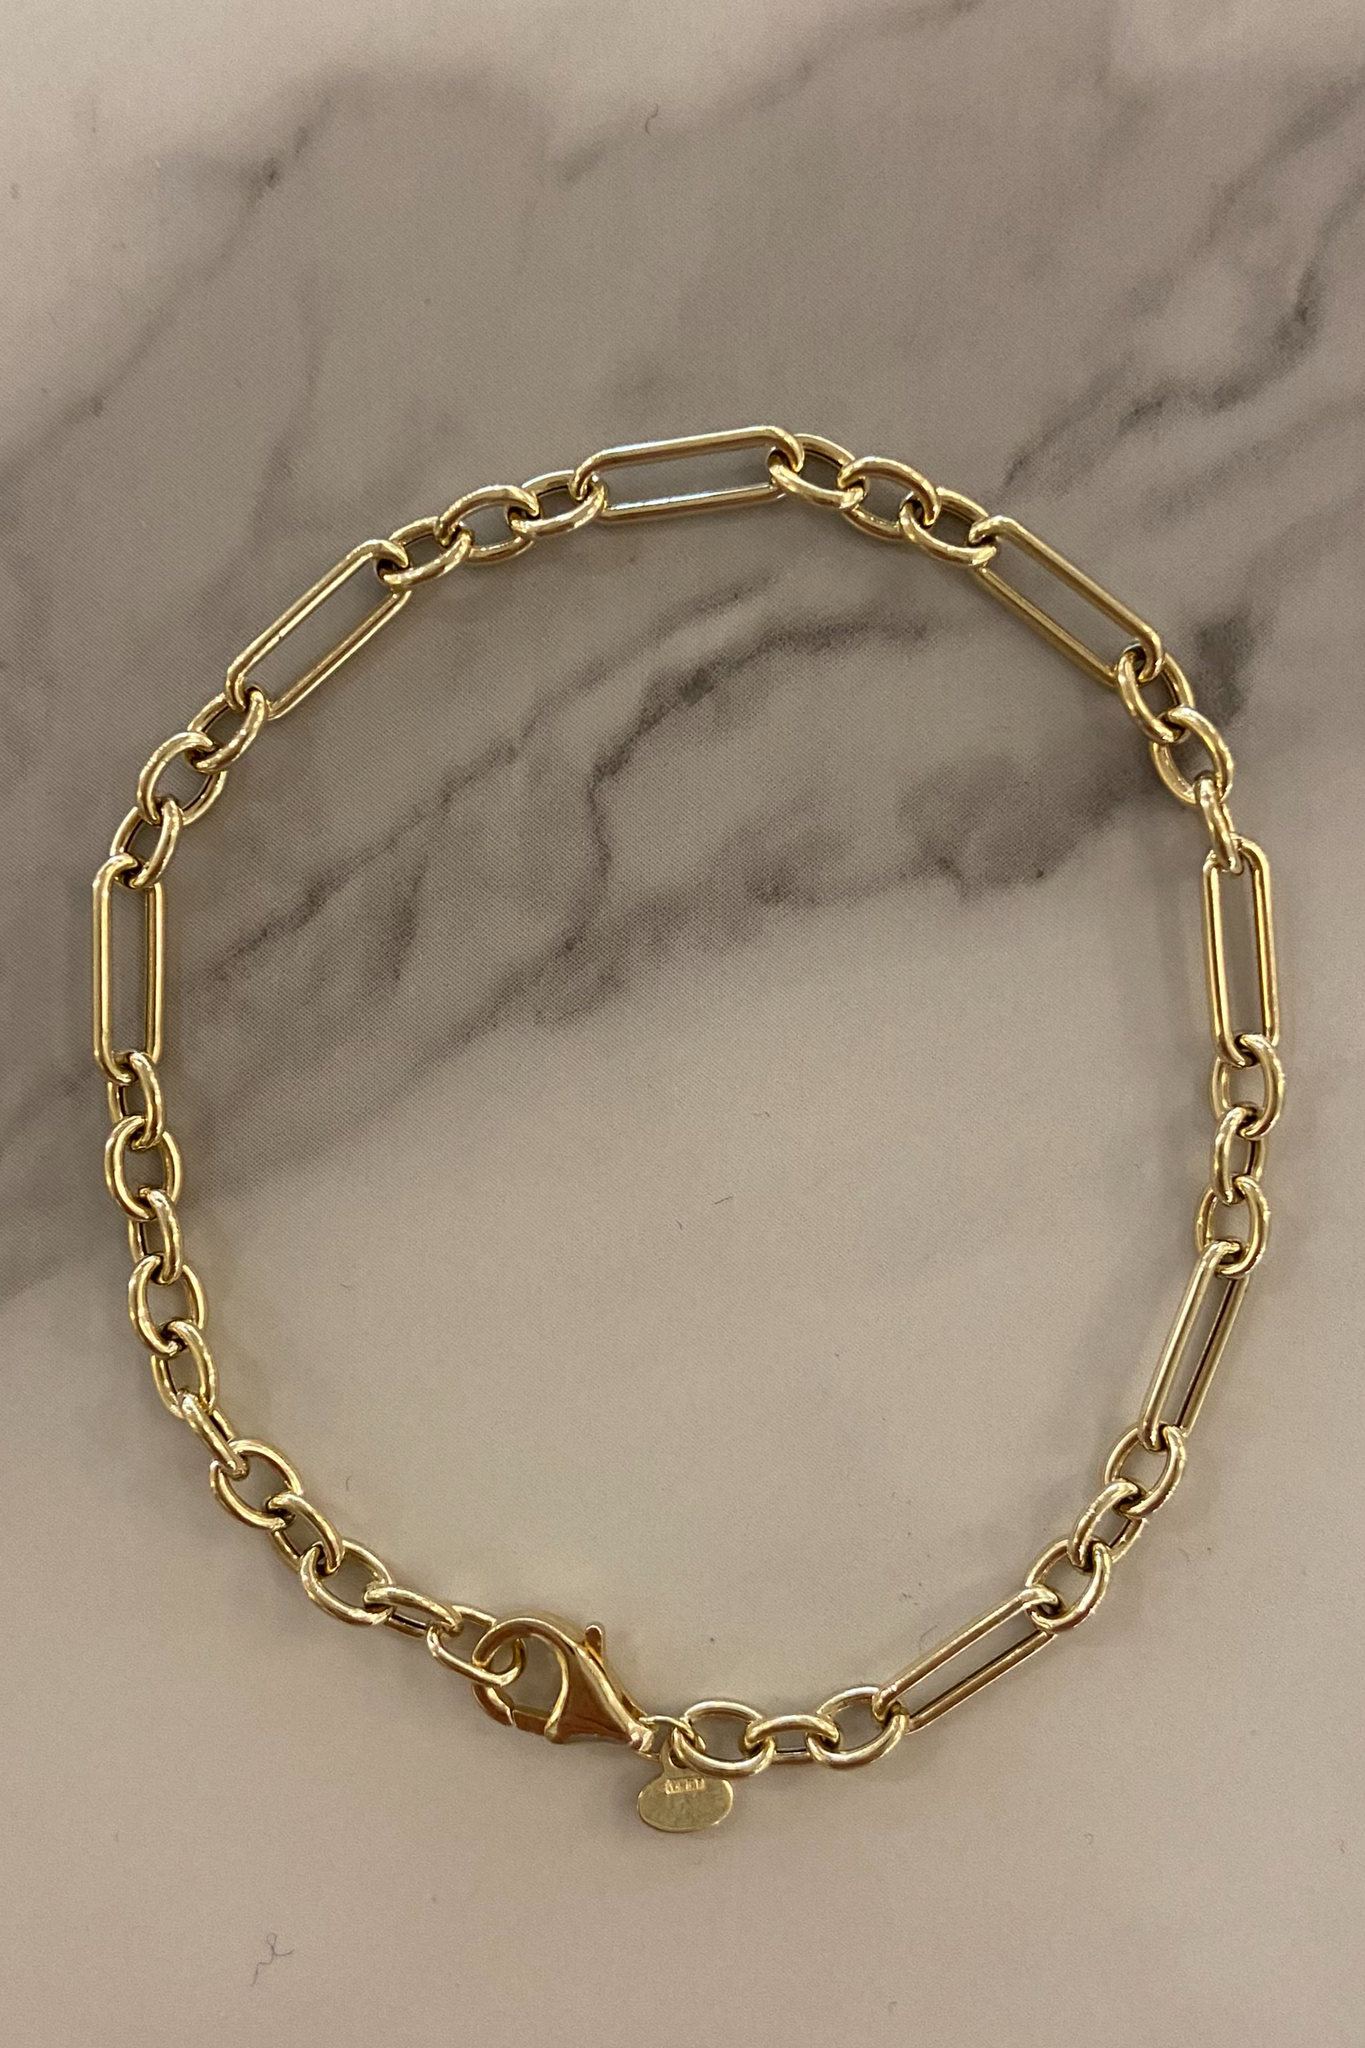 14k YG Chain Link Bracelet